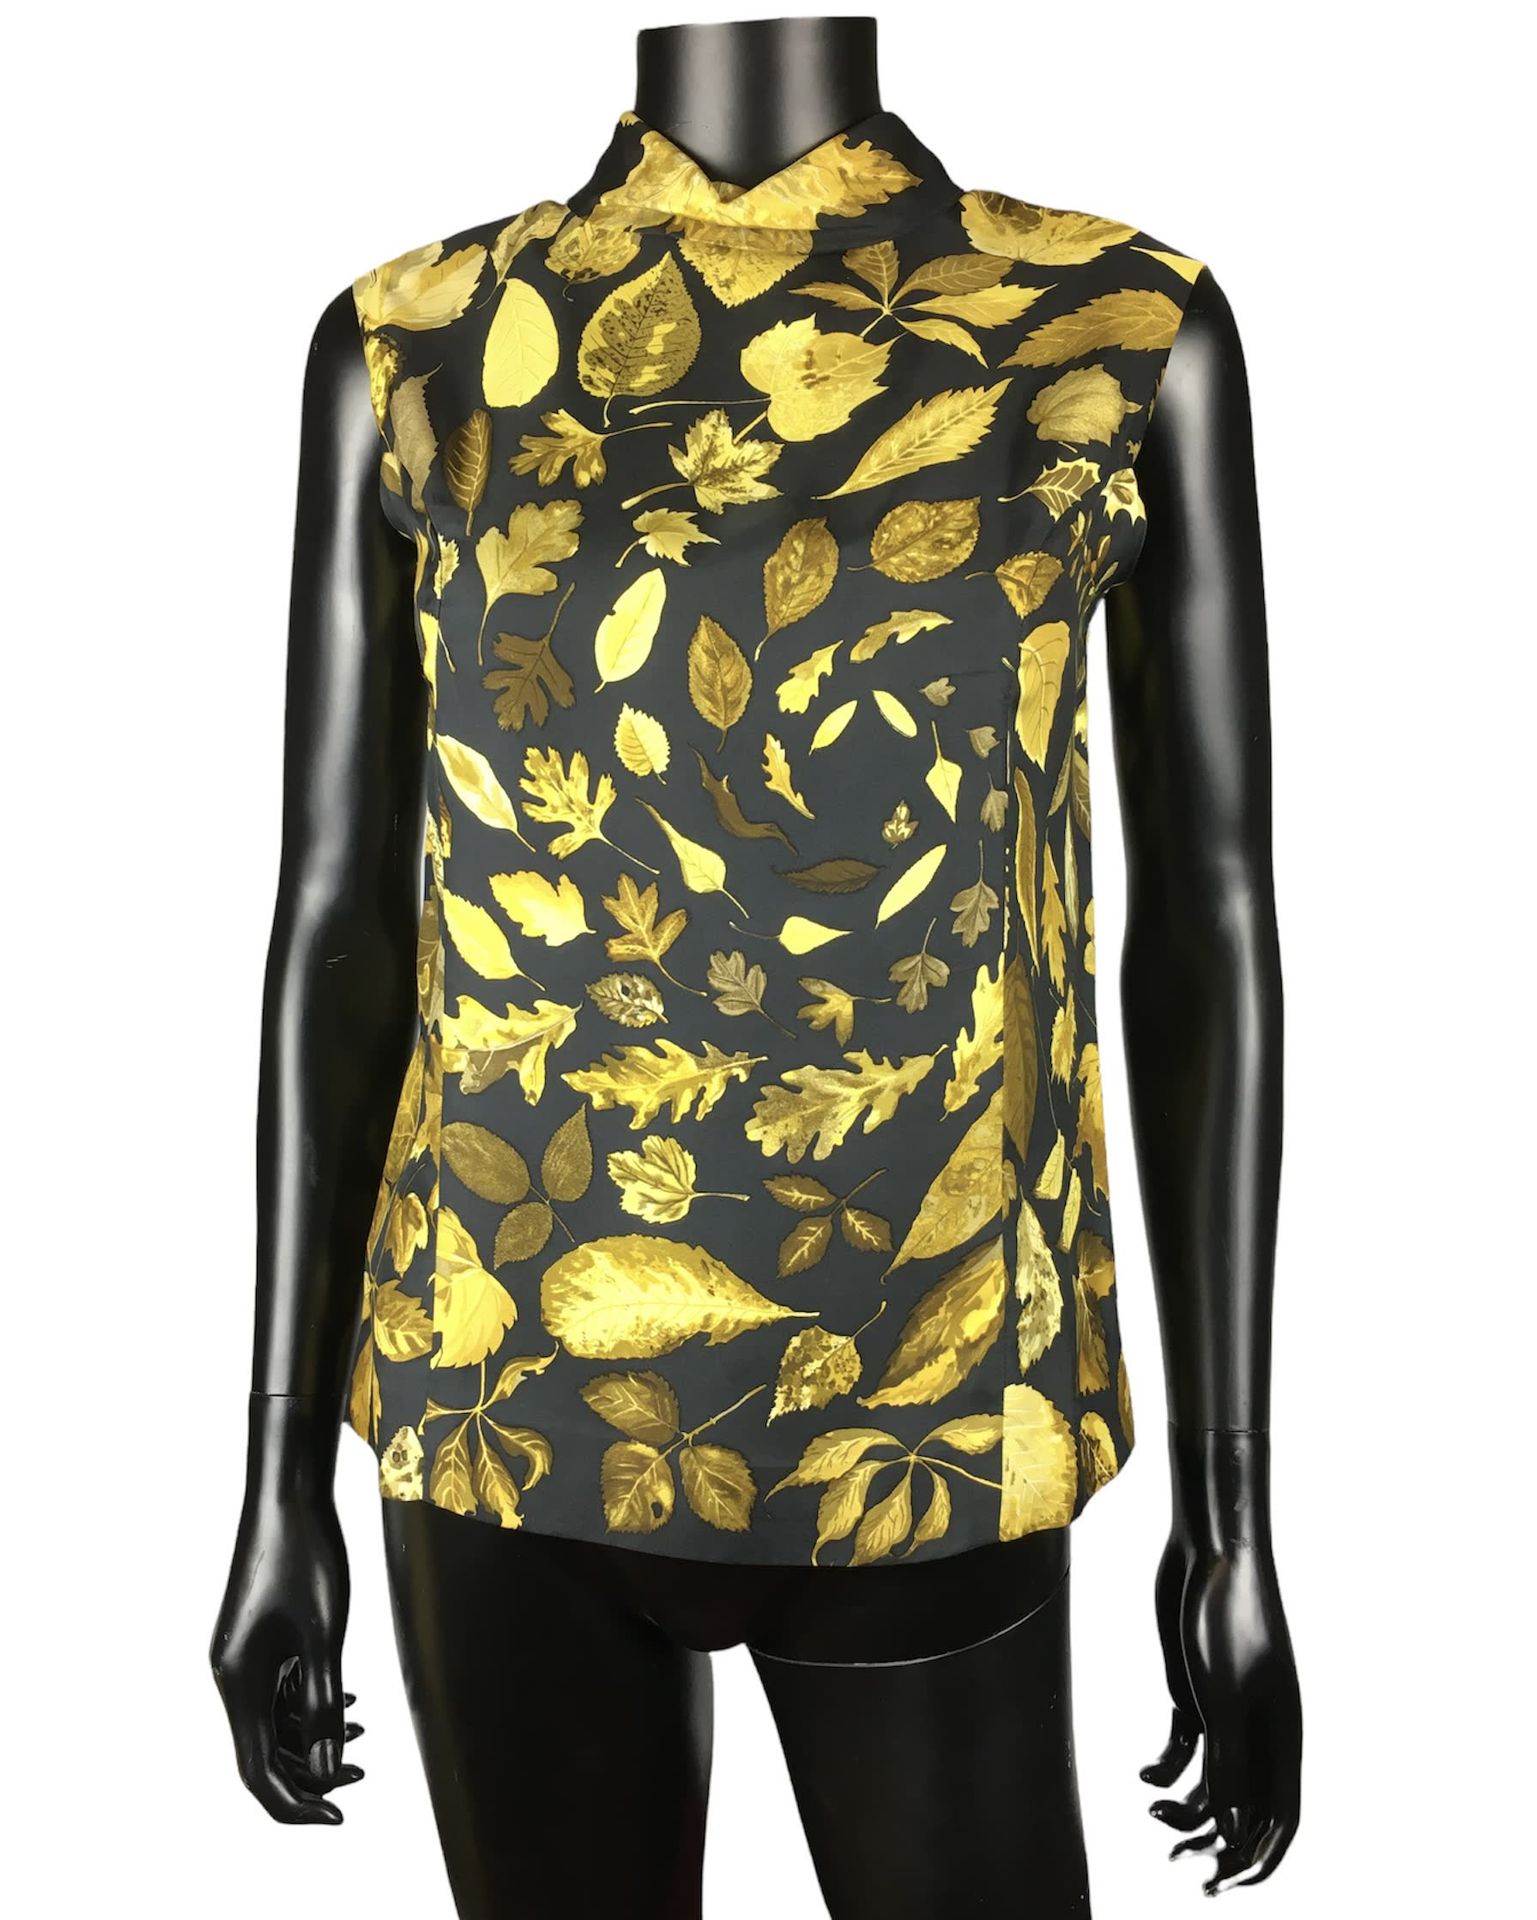 Null 巴黎爱马仕 黑色和黄色丝绸的无袖衬衫，领口有褶皱，上面装饰有秋叶。背面有拉链。 尺寸42 IT（尺寸38 FR）。 状况良好。